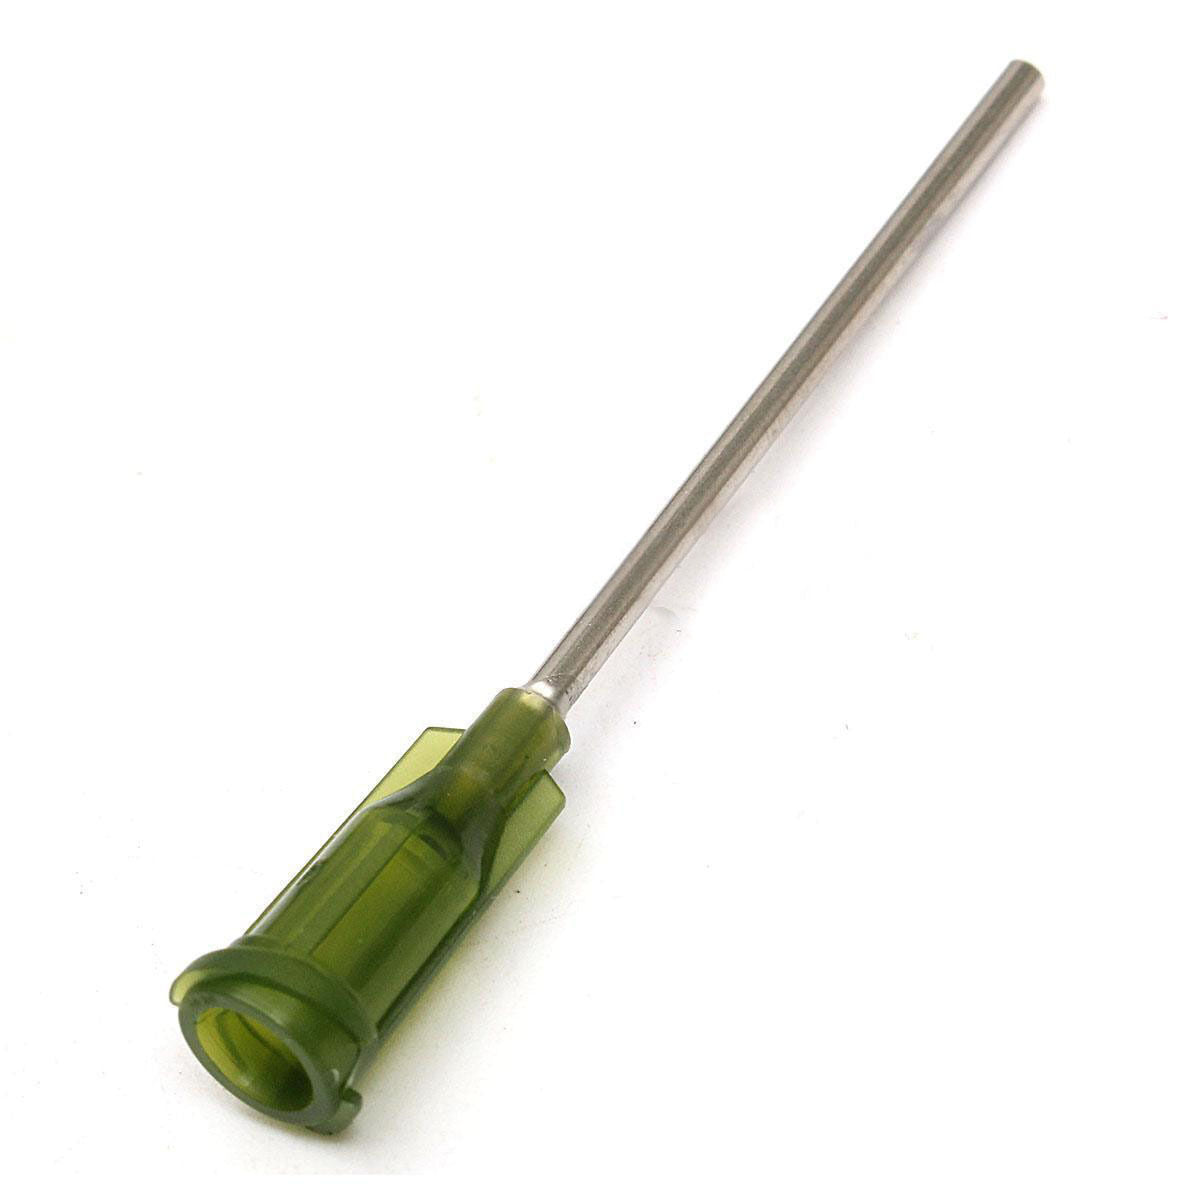 10pcs Green Blunt Dispensing Needles Syringe Needle Tips 38mm/1.5" 14Gauge